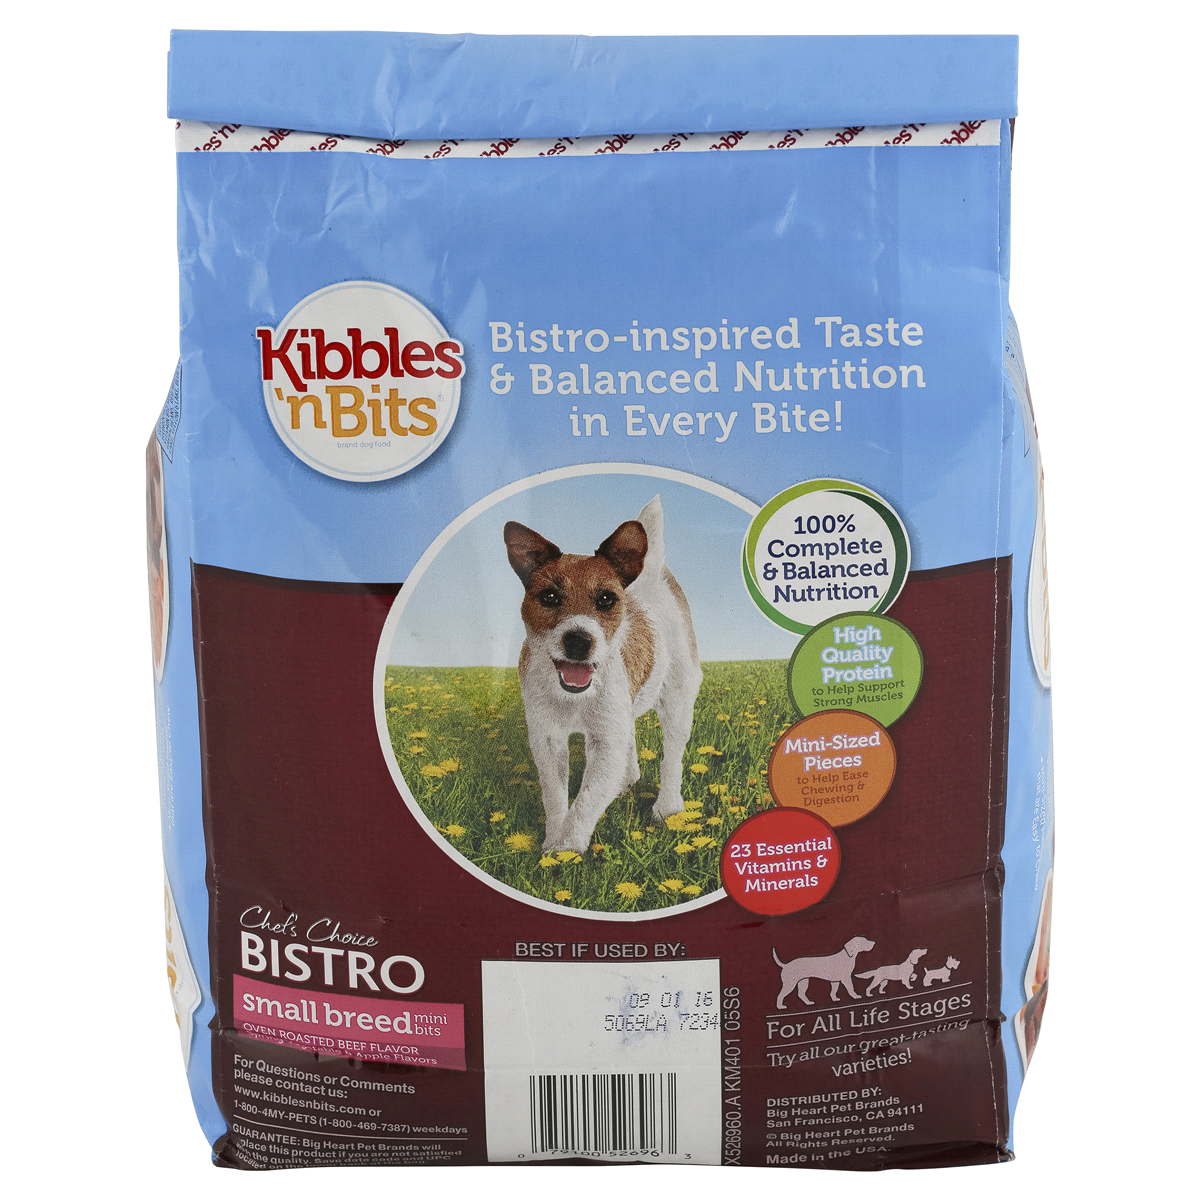 olroy kibbles and bits dog food